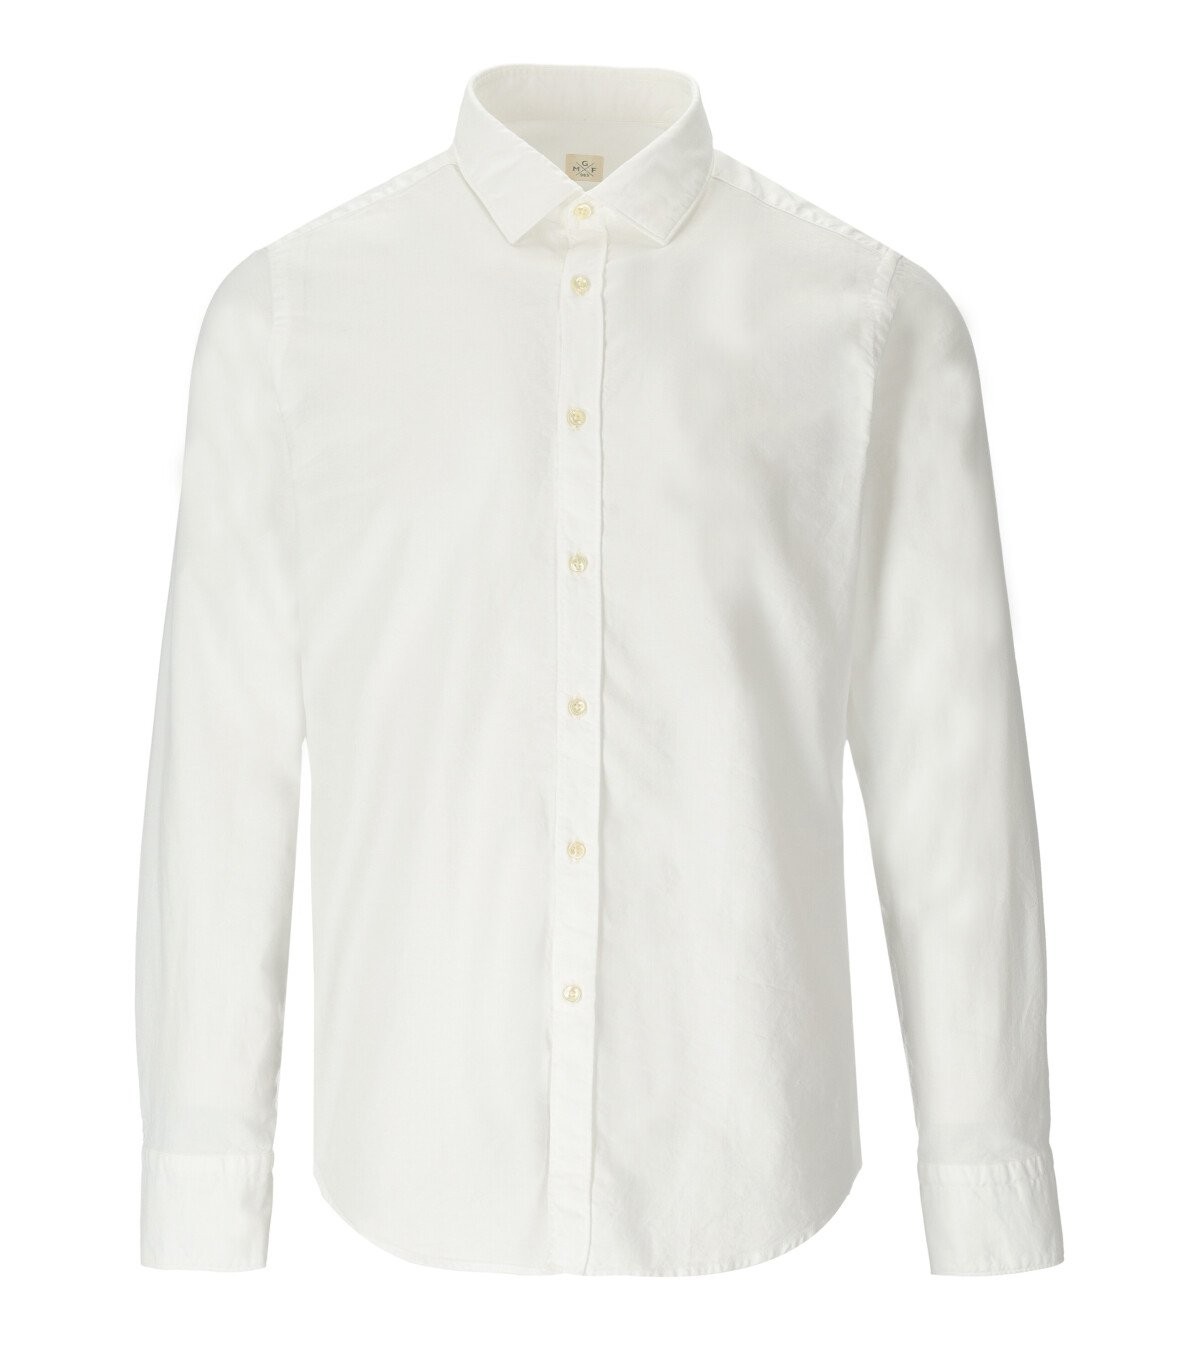 Gmf 965 White Cotton Pique Shirt